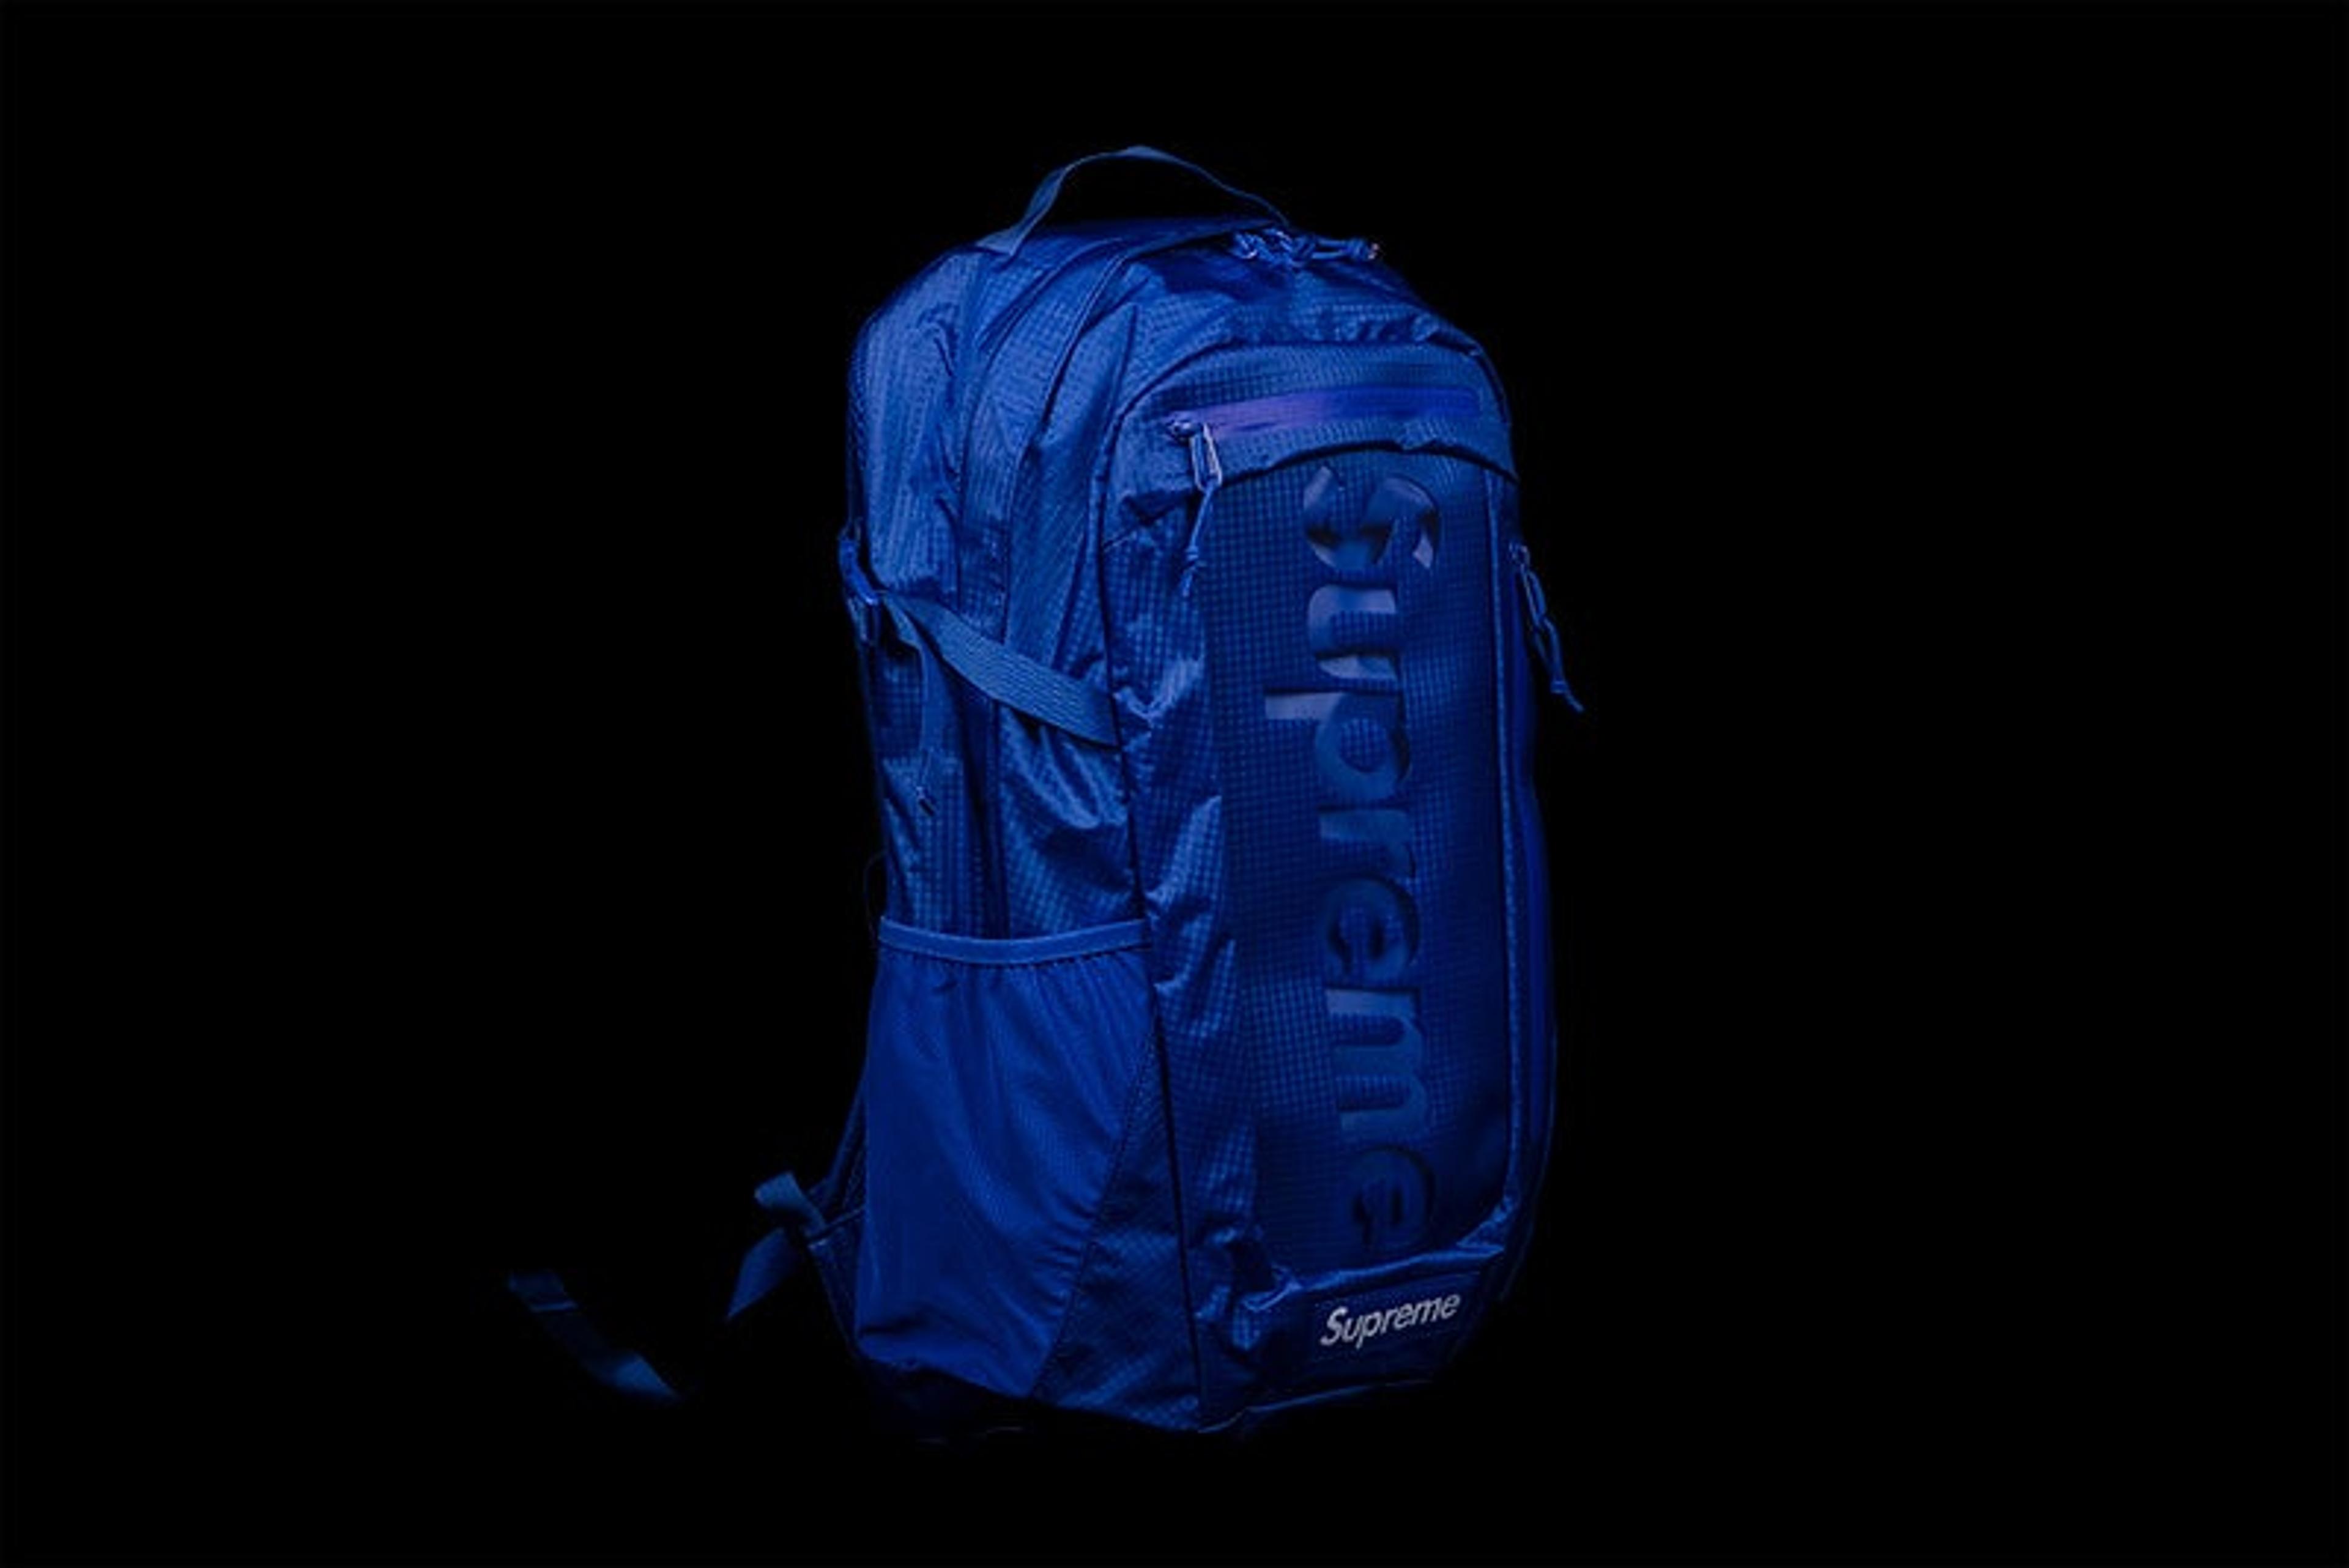 supreme backpack ss21